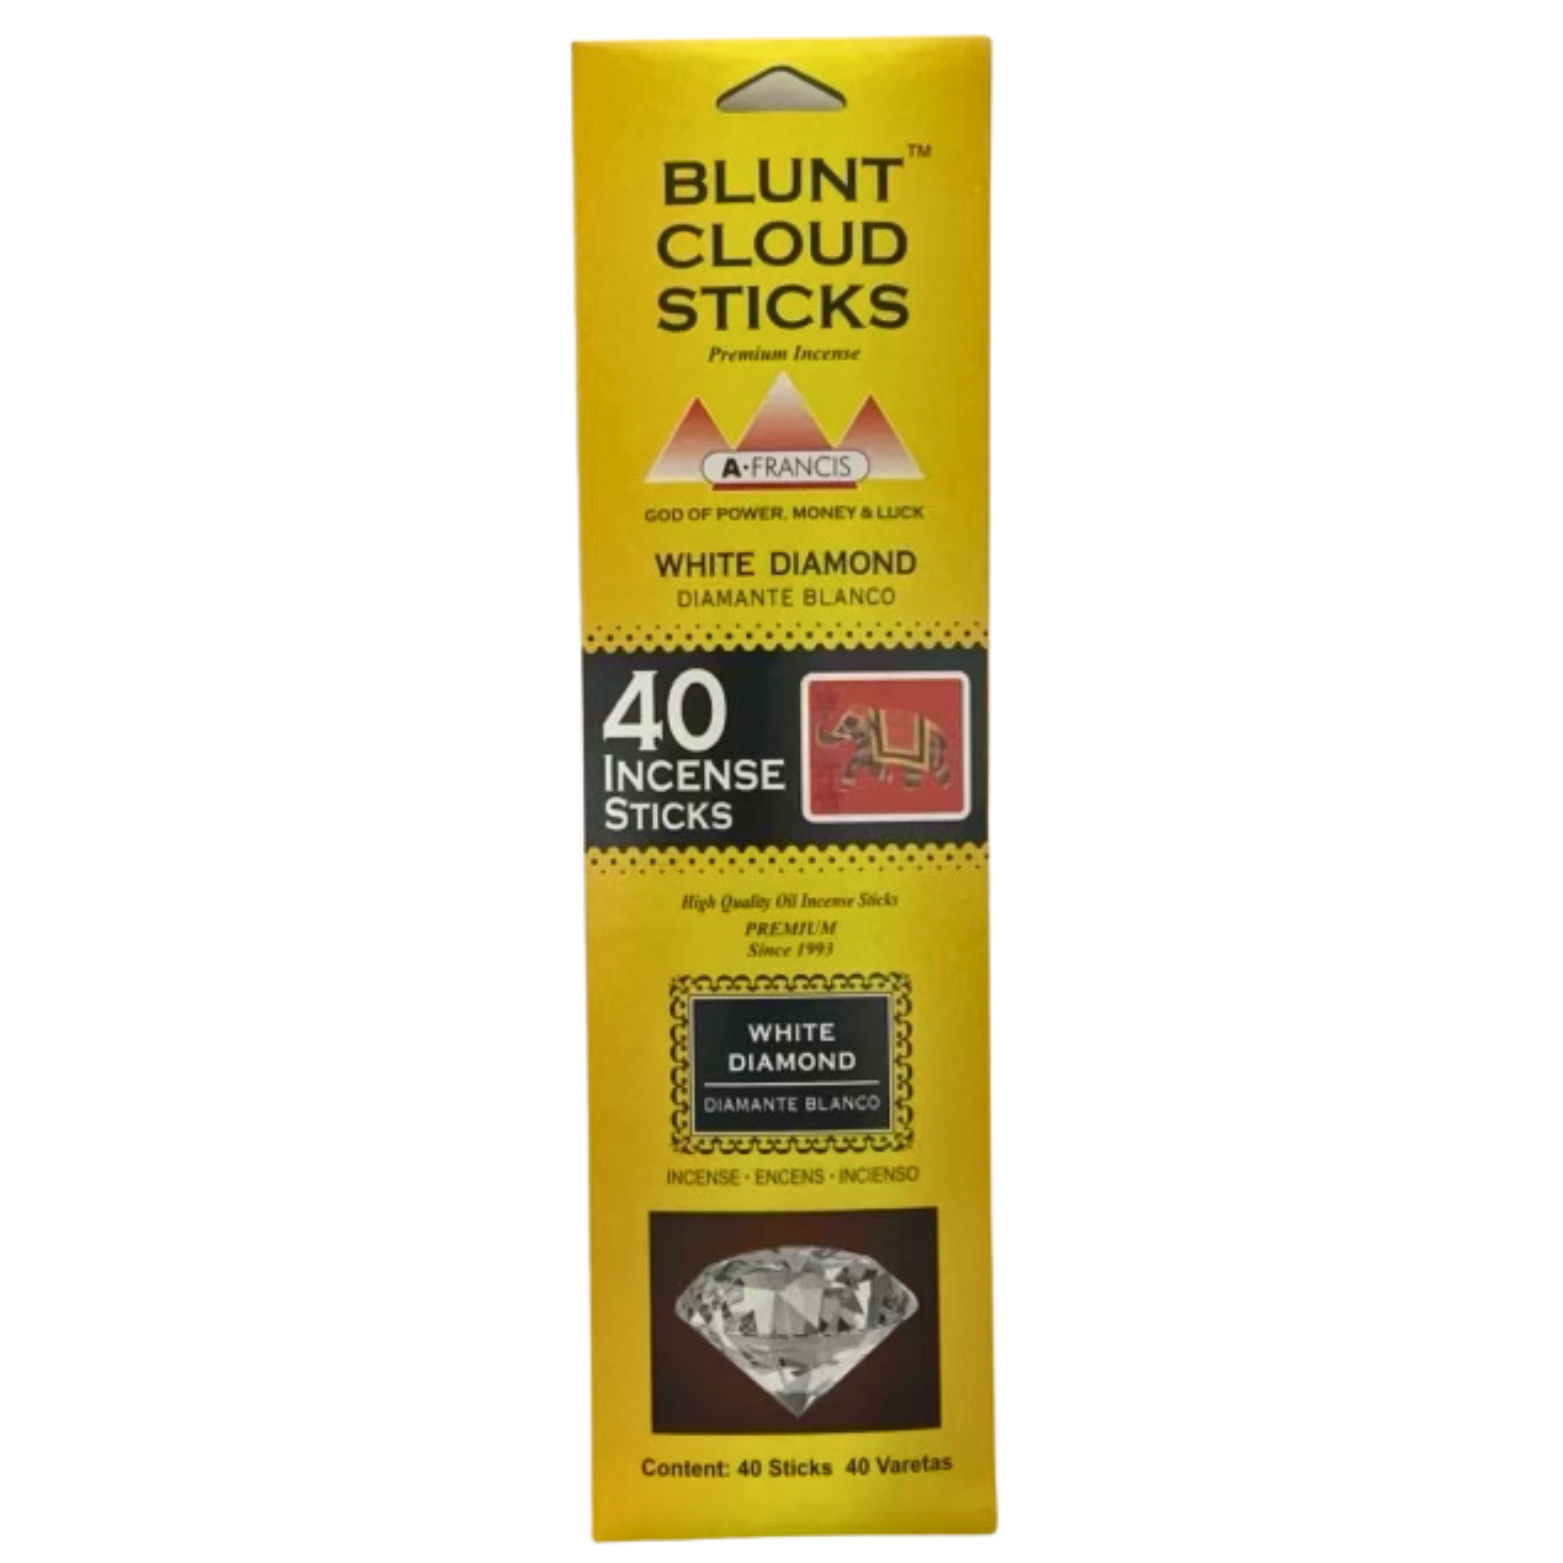 Blunt Cloud 11 Inch White Diamond Incense Sticks